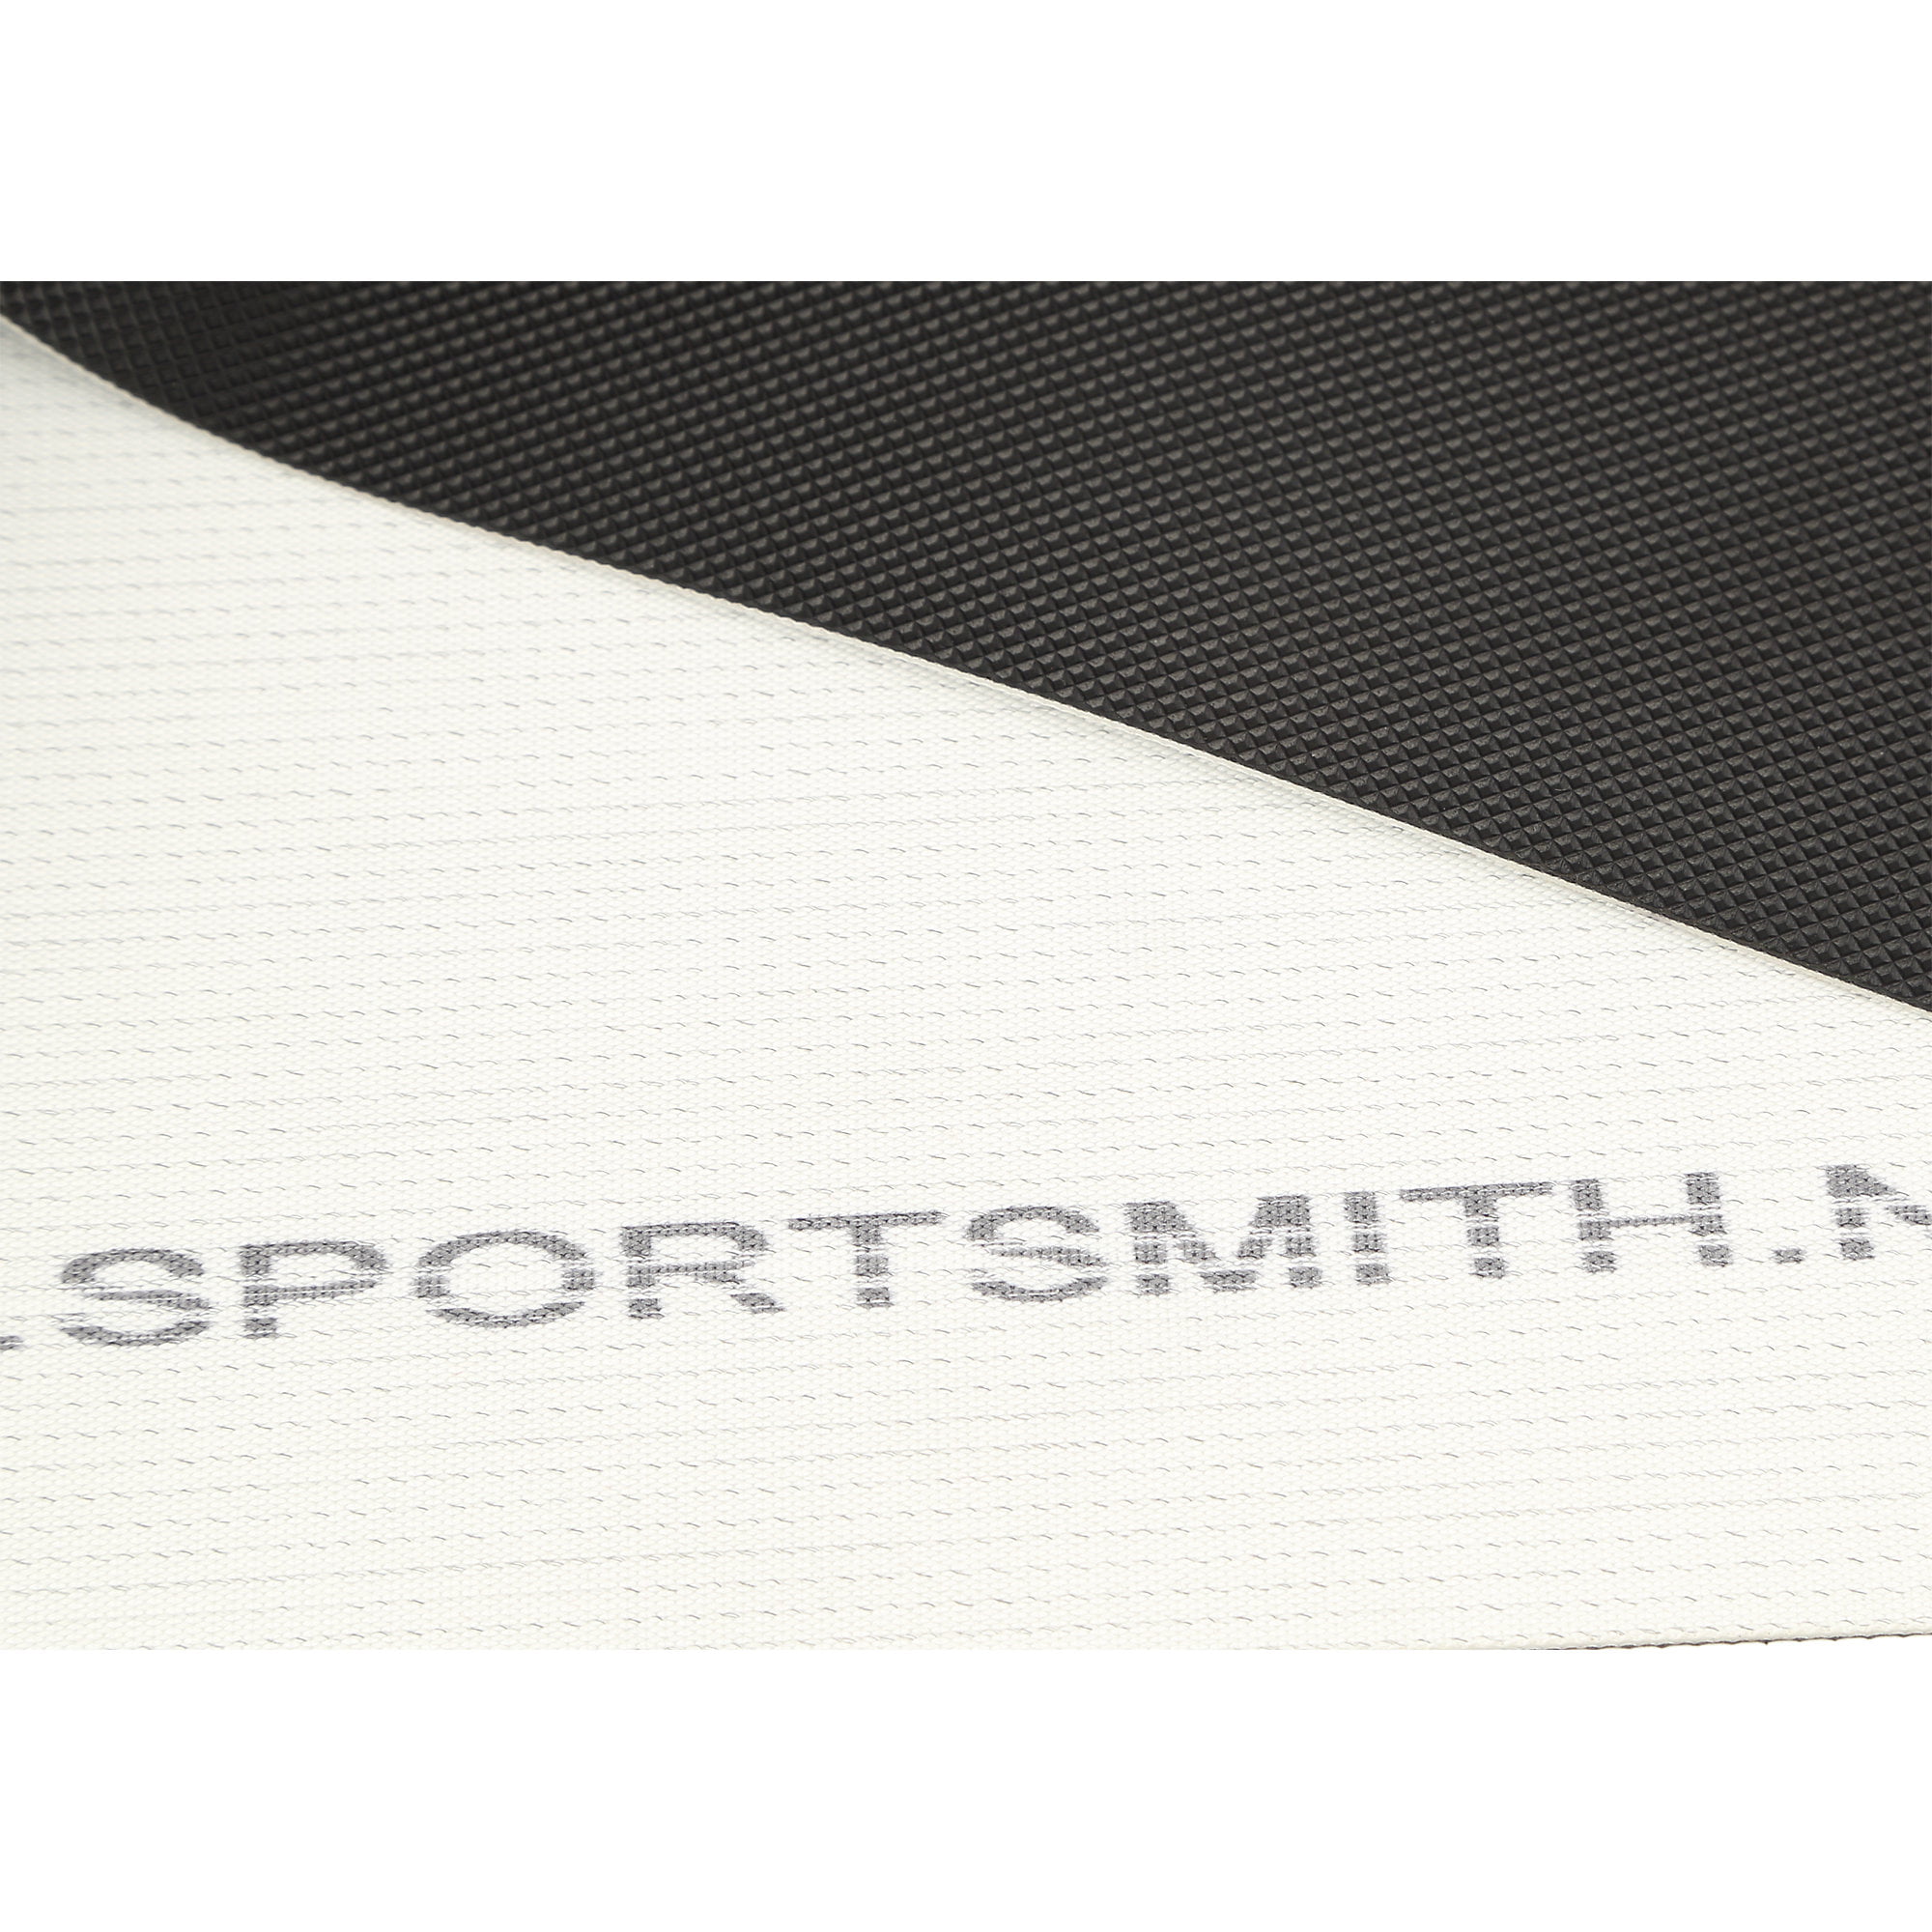 Sportsmith Treadmill Walking Belt fits Vision Fitness T8500HRC Mfg before 7/98* 